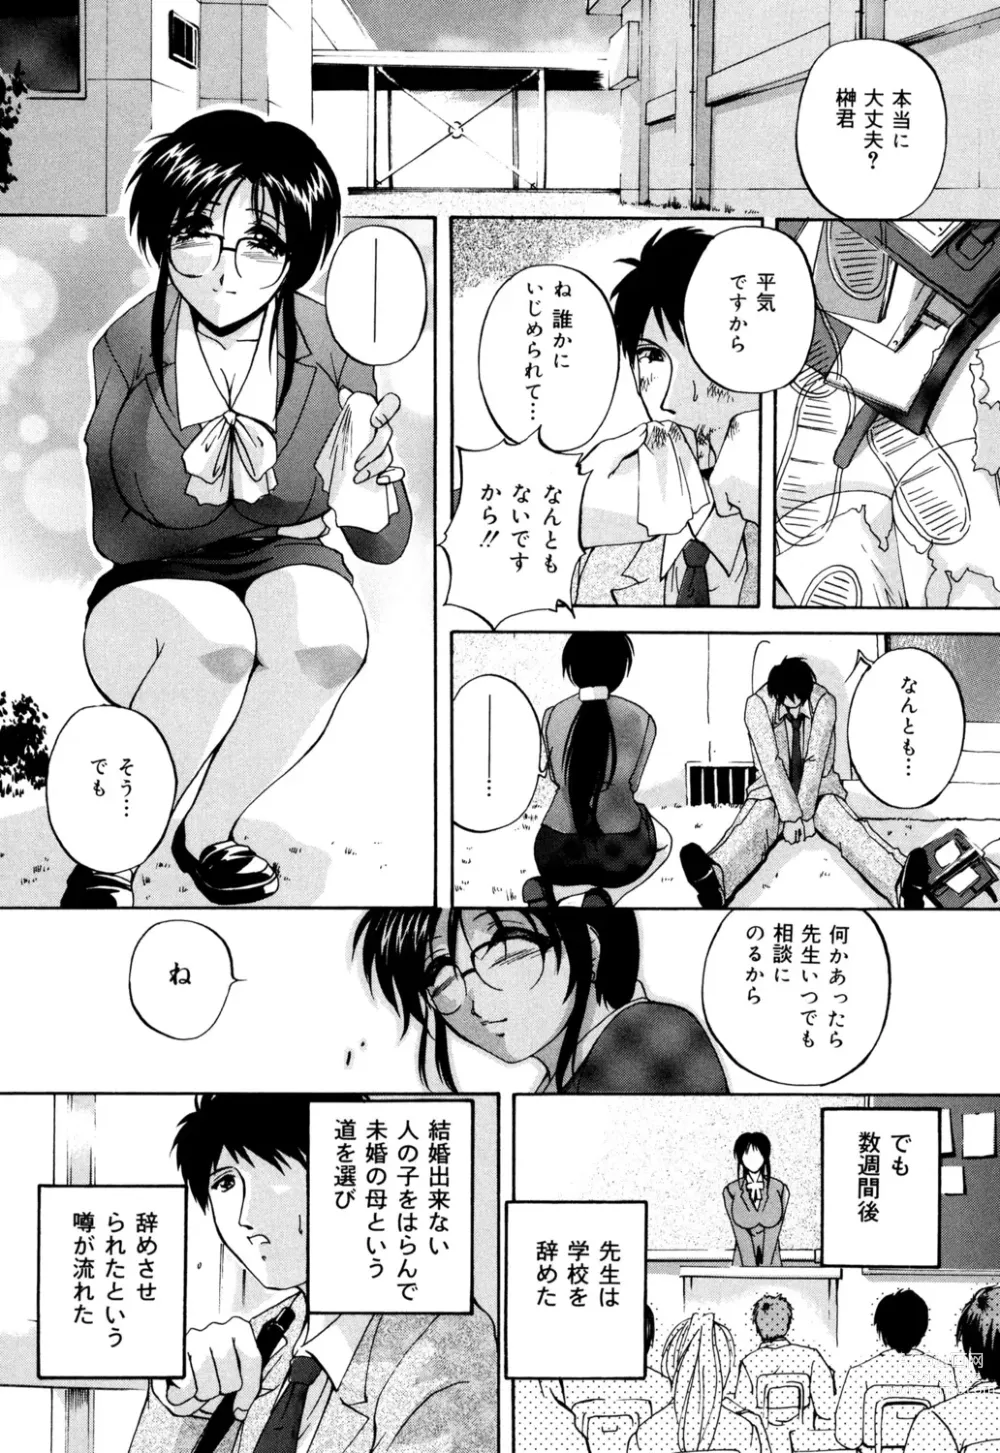 Page 138 of manga Kinshin Soukan Musume